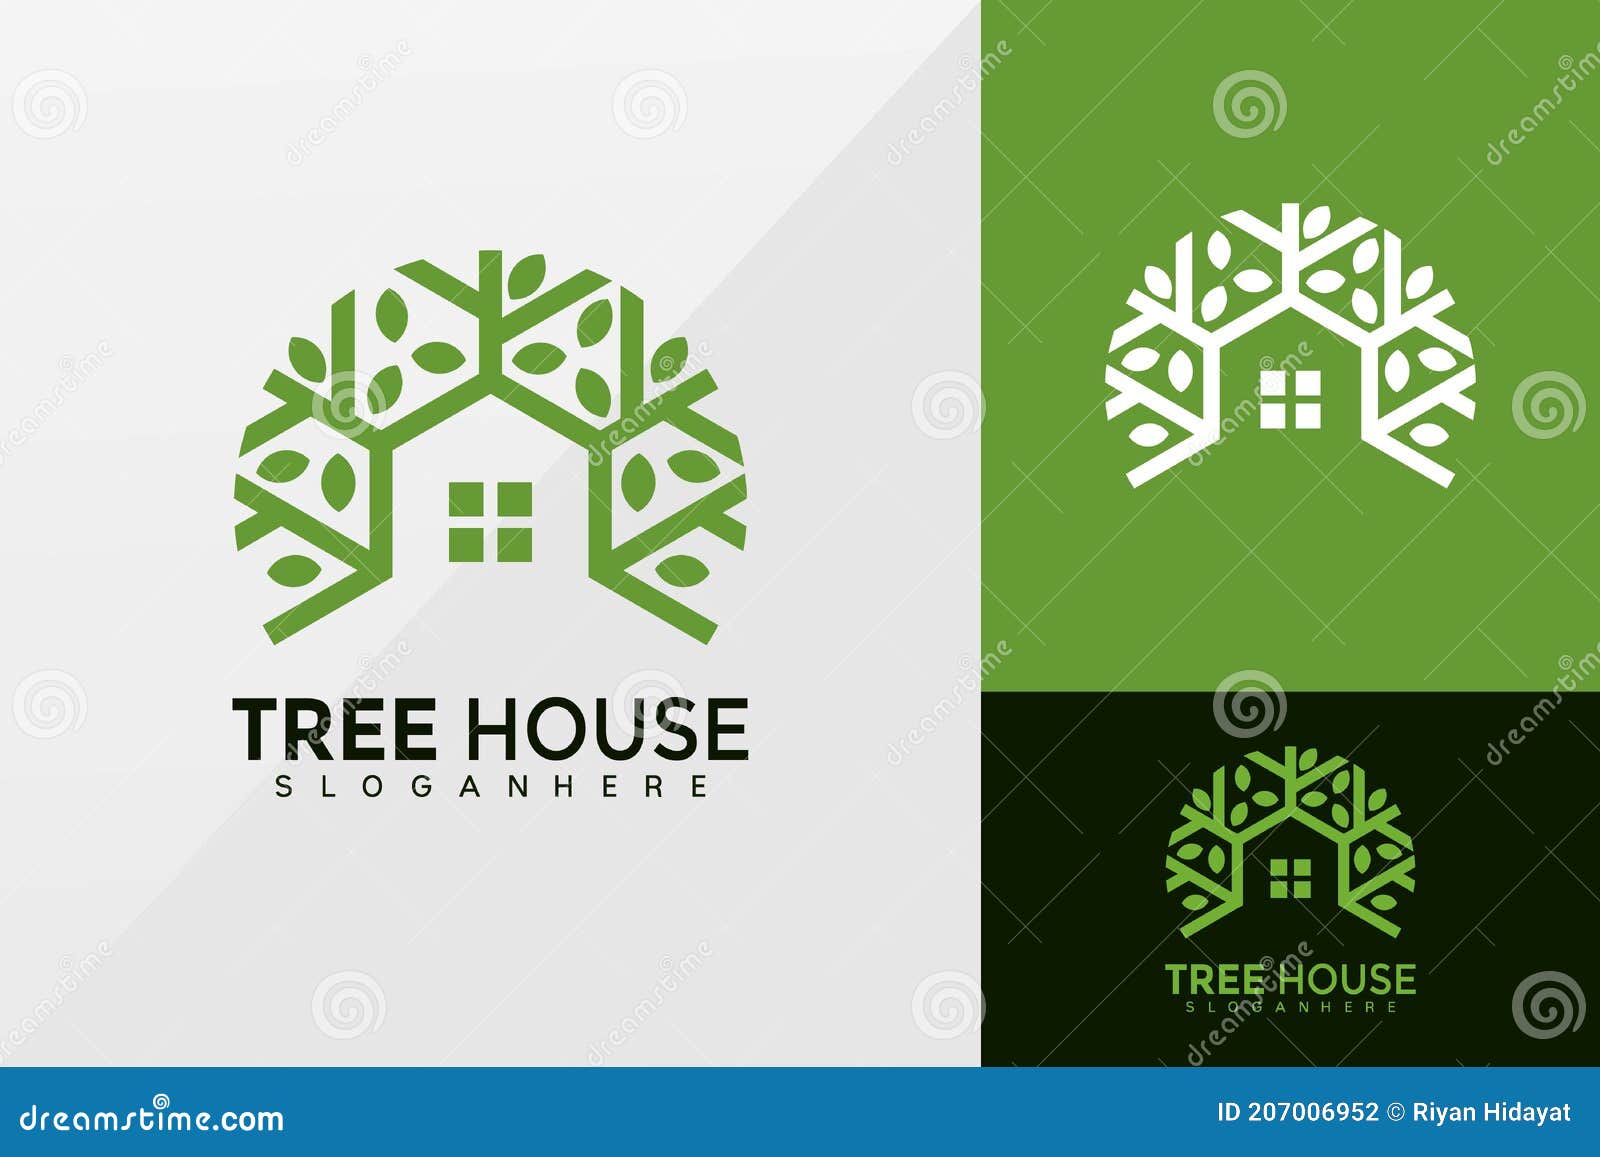 Tree House Business Logo Vector, Brand Identity Logos Design